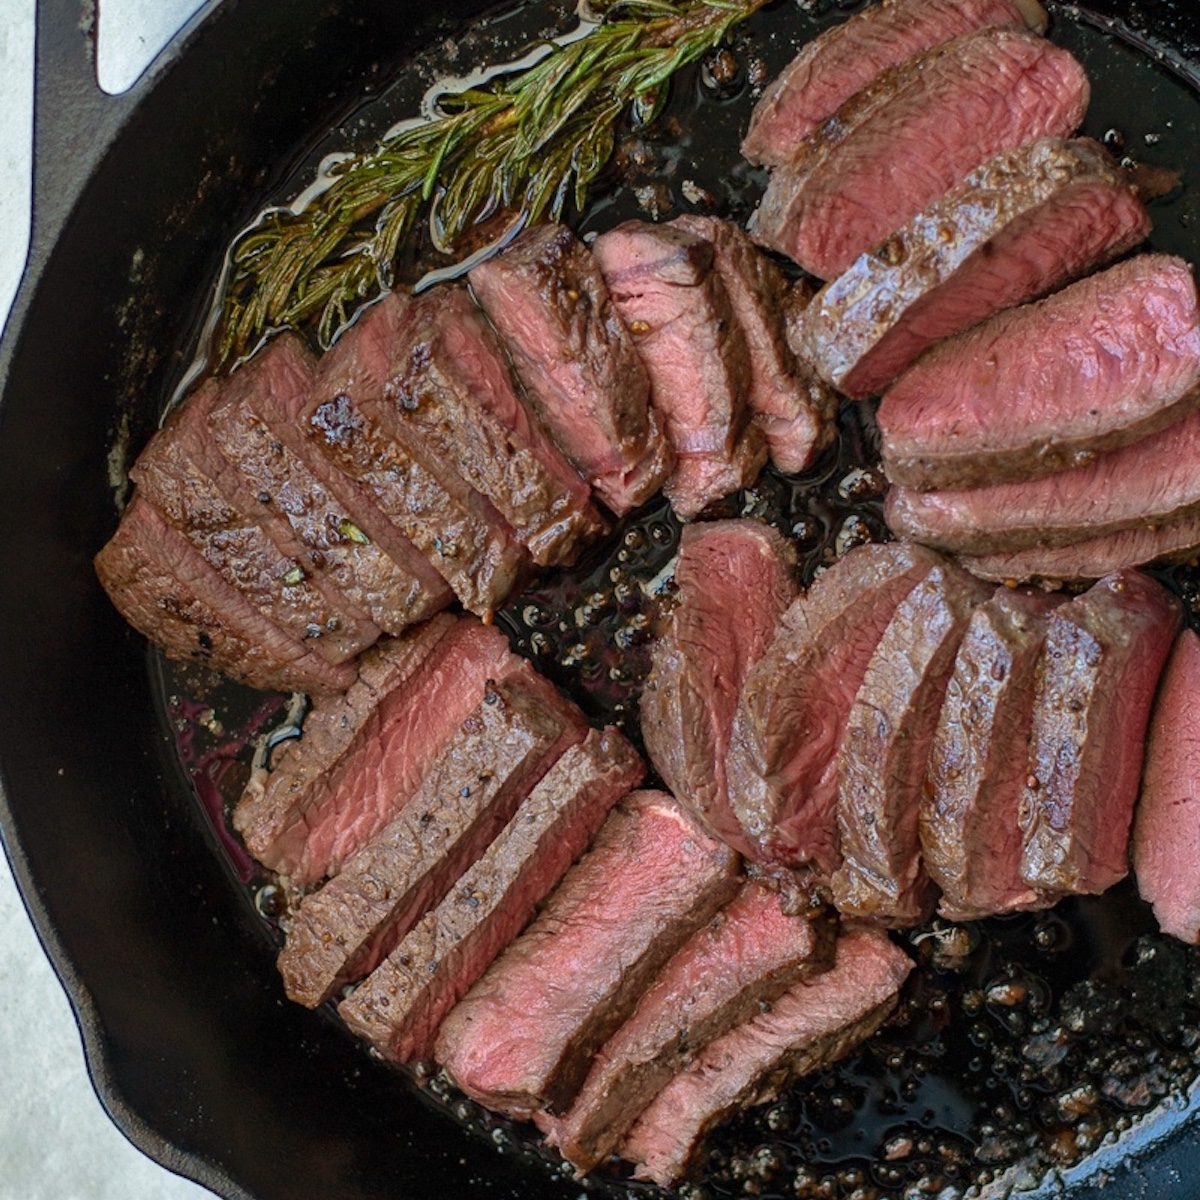 Easy Cast Iron Skillet Steak Recipe - A Joyfully Mad Kitchen